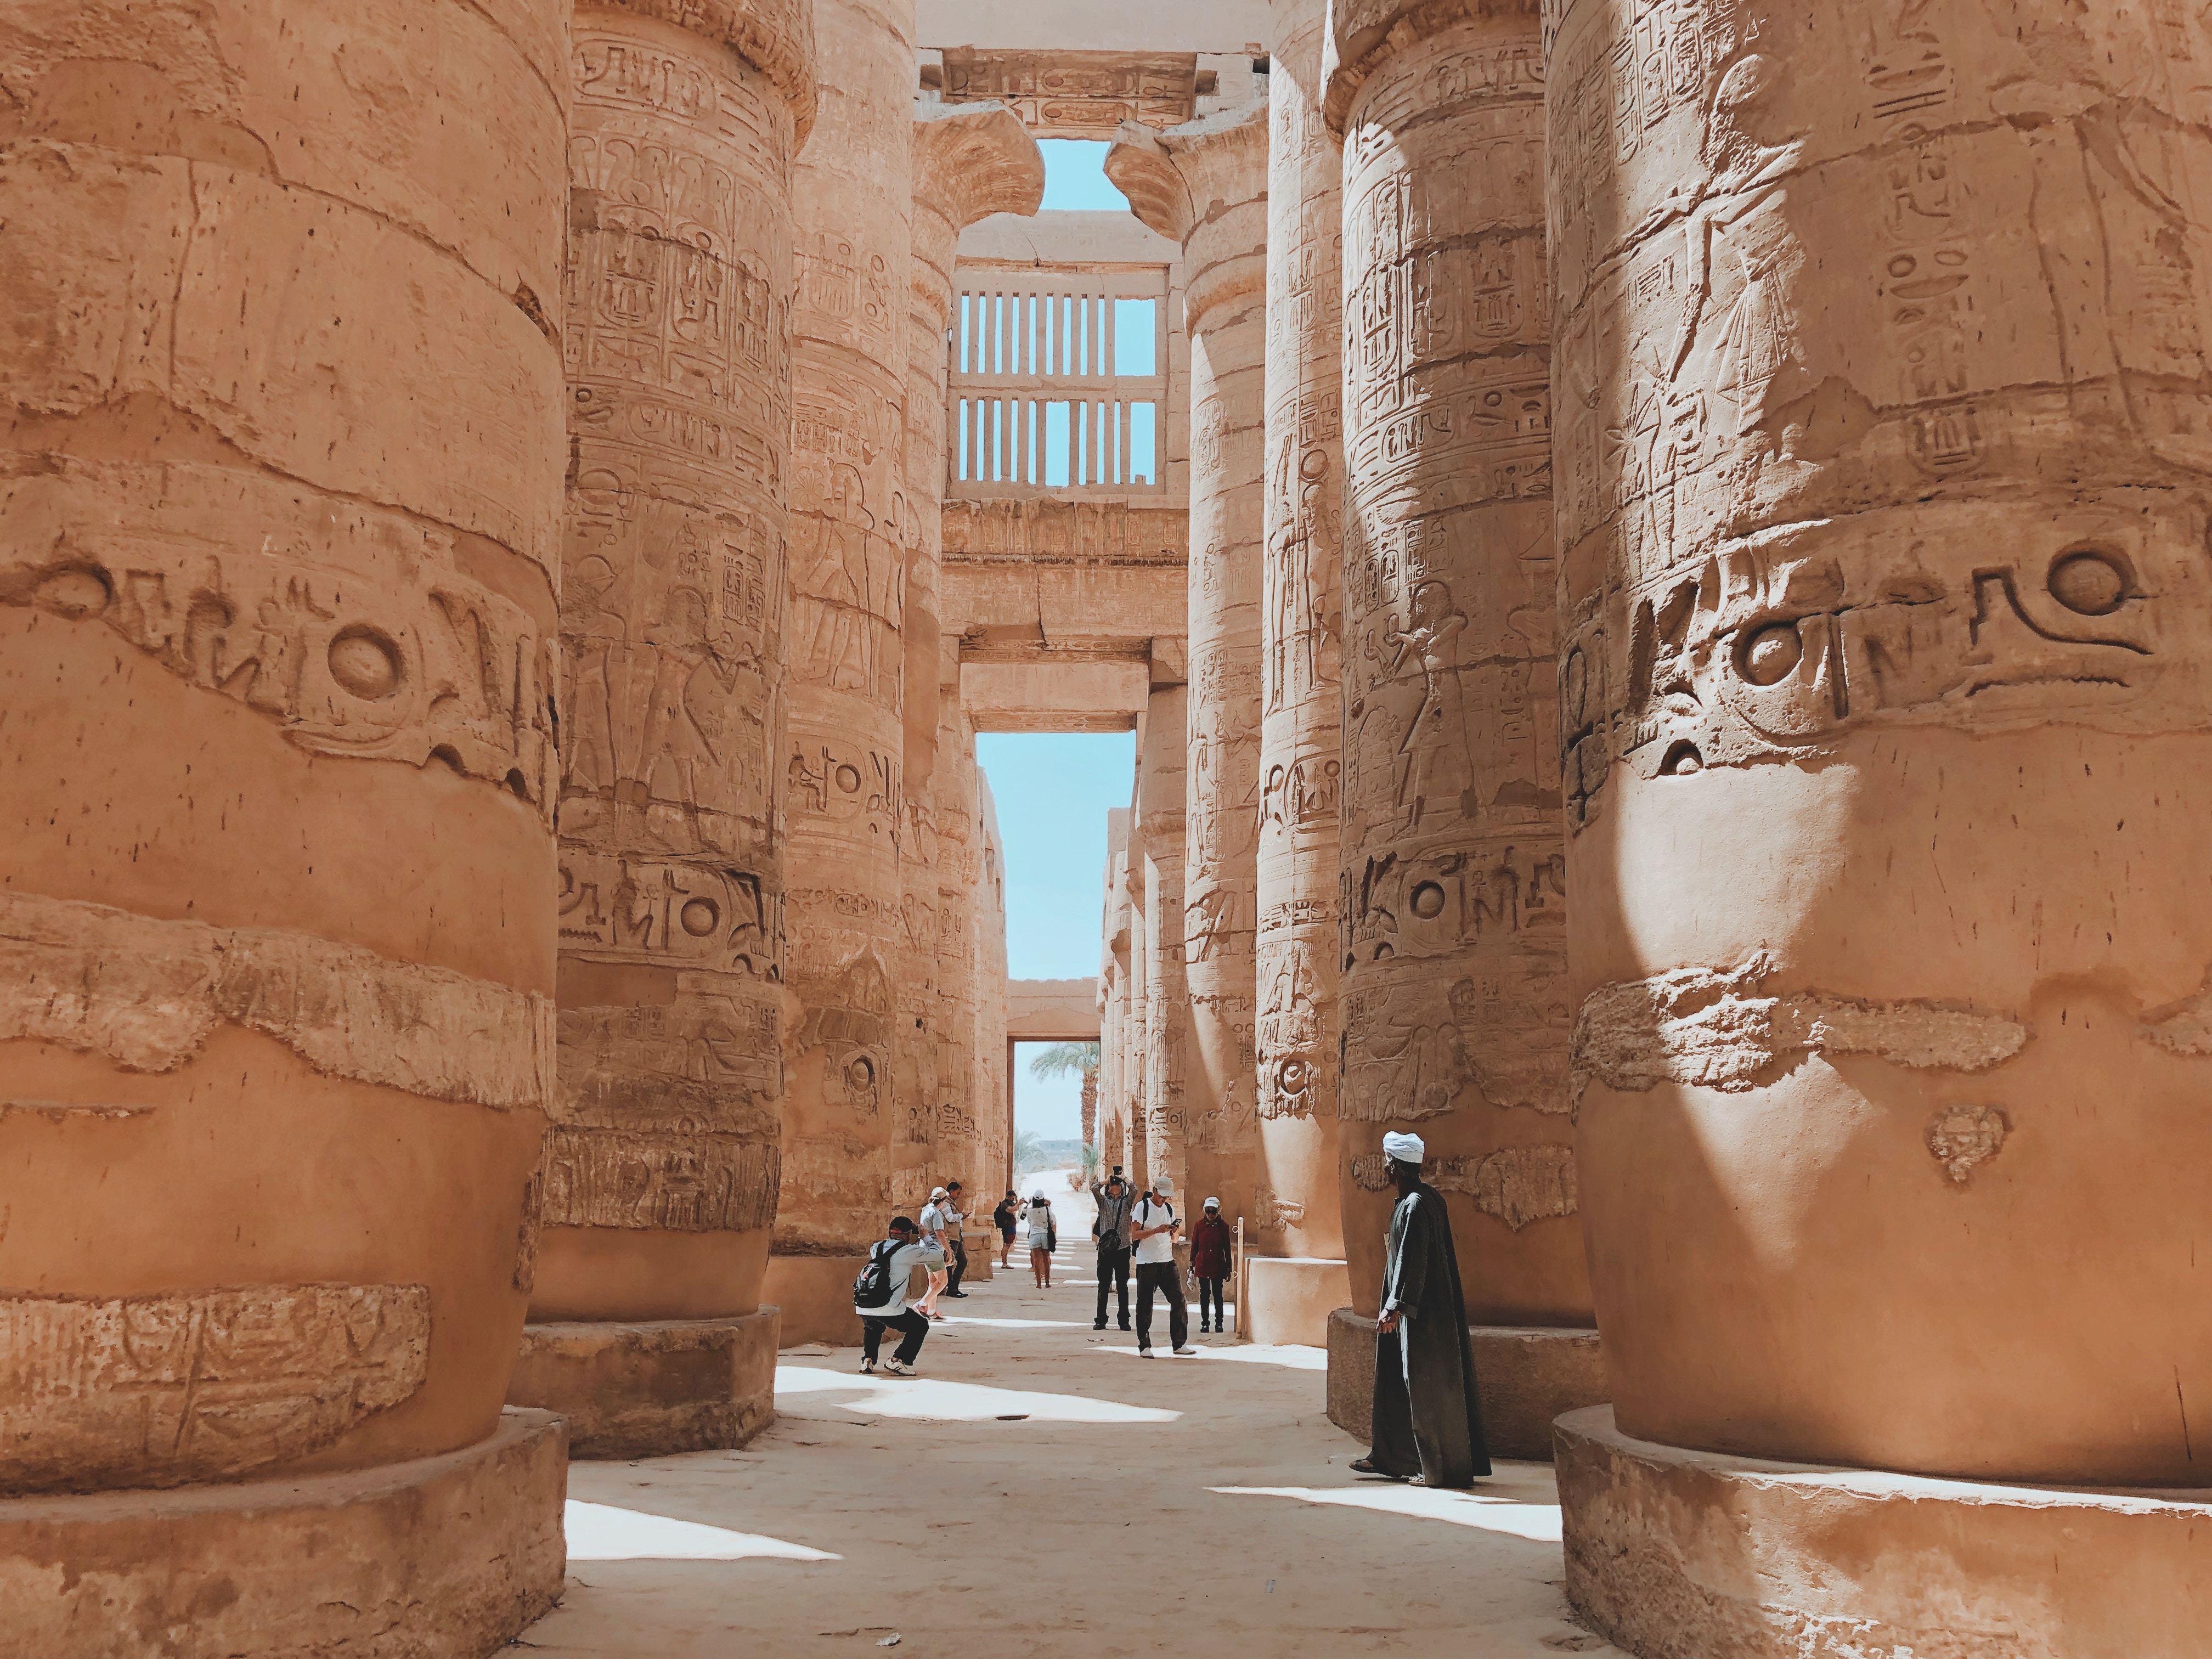 People walking under massive pillars with heiroglyphs in Egypt